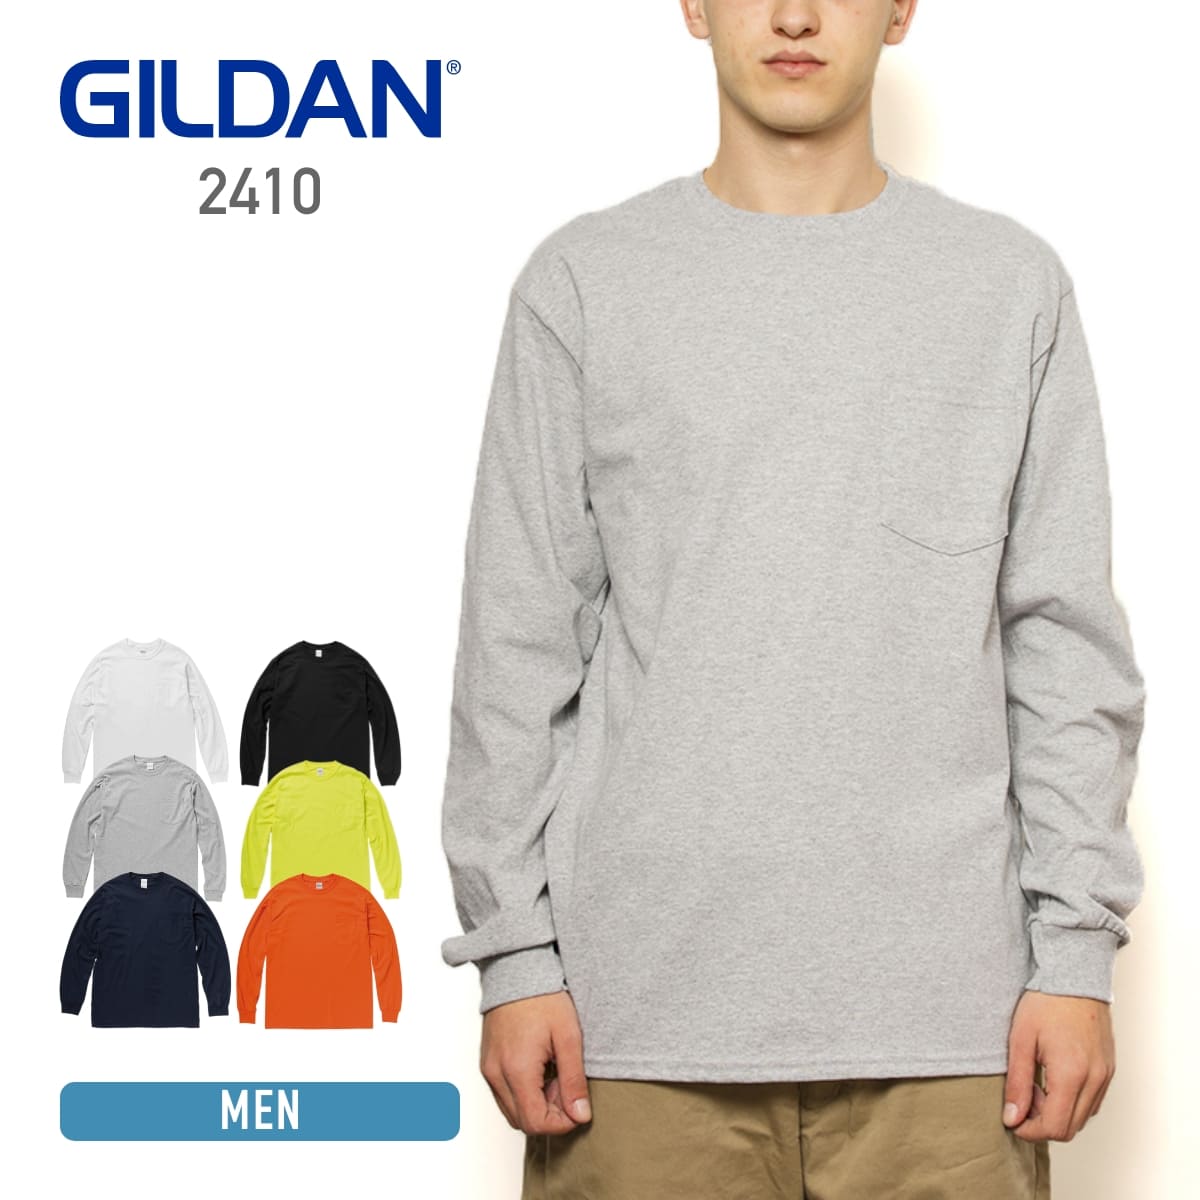 GILDAN/長袖Tシャツ一覧 – Tshirt.stビジネス